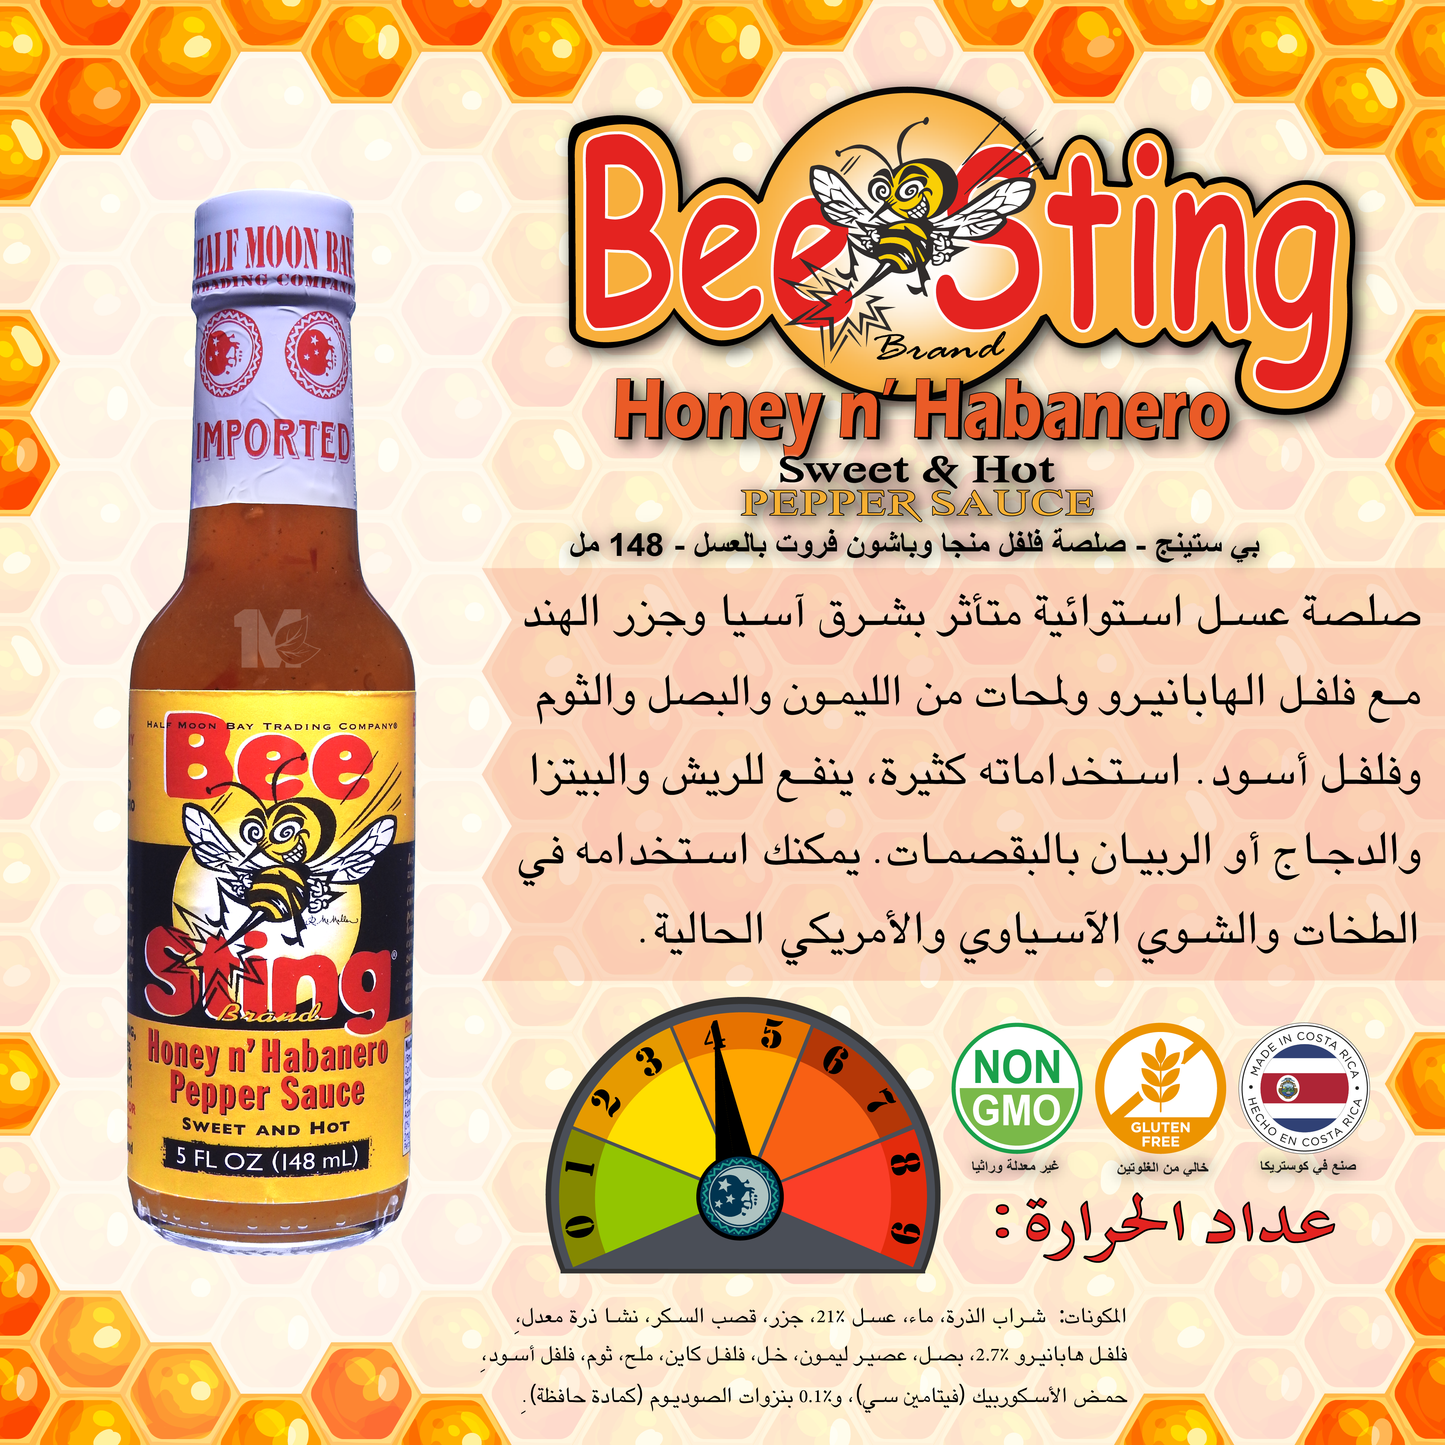 BeeSting - Honey n’ Habanero - Pepper Sauce 148ML